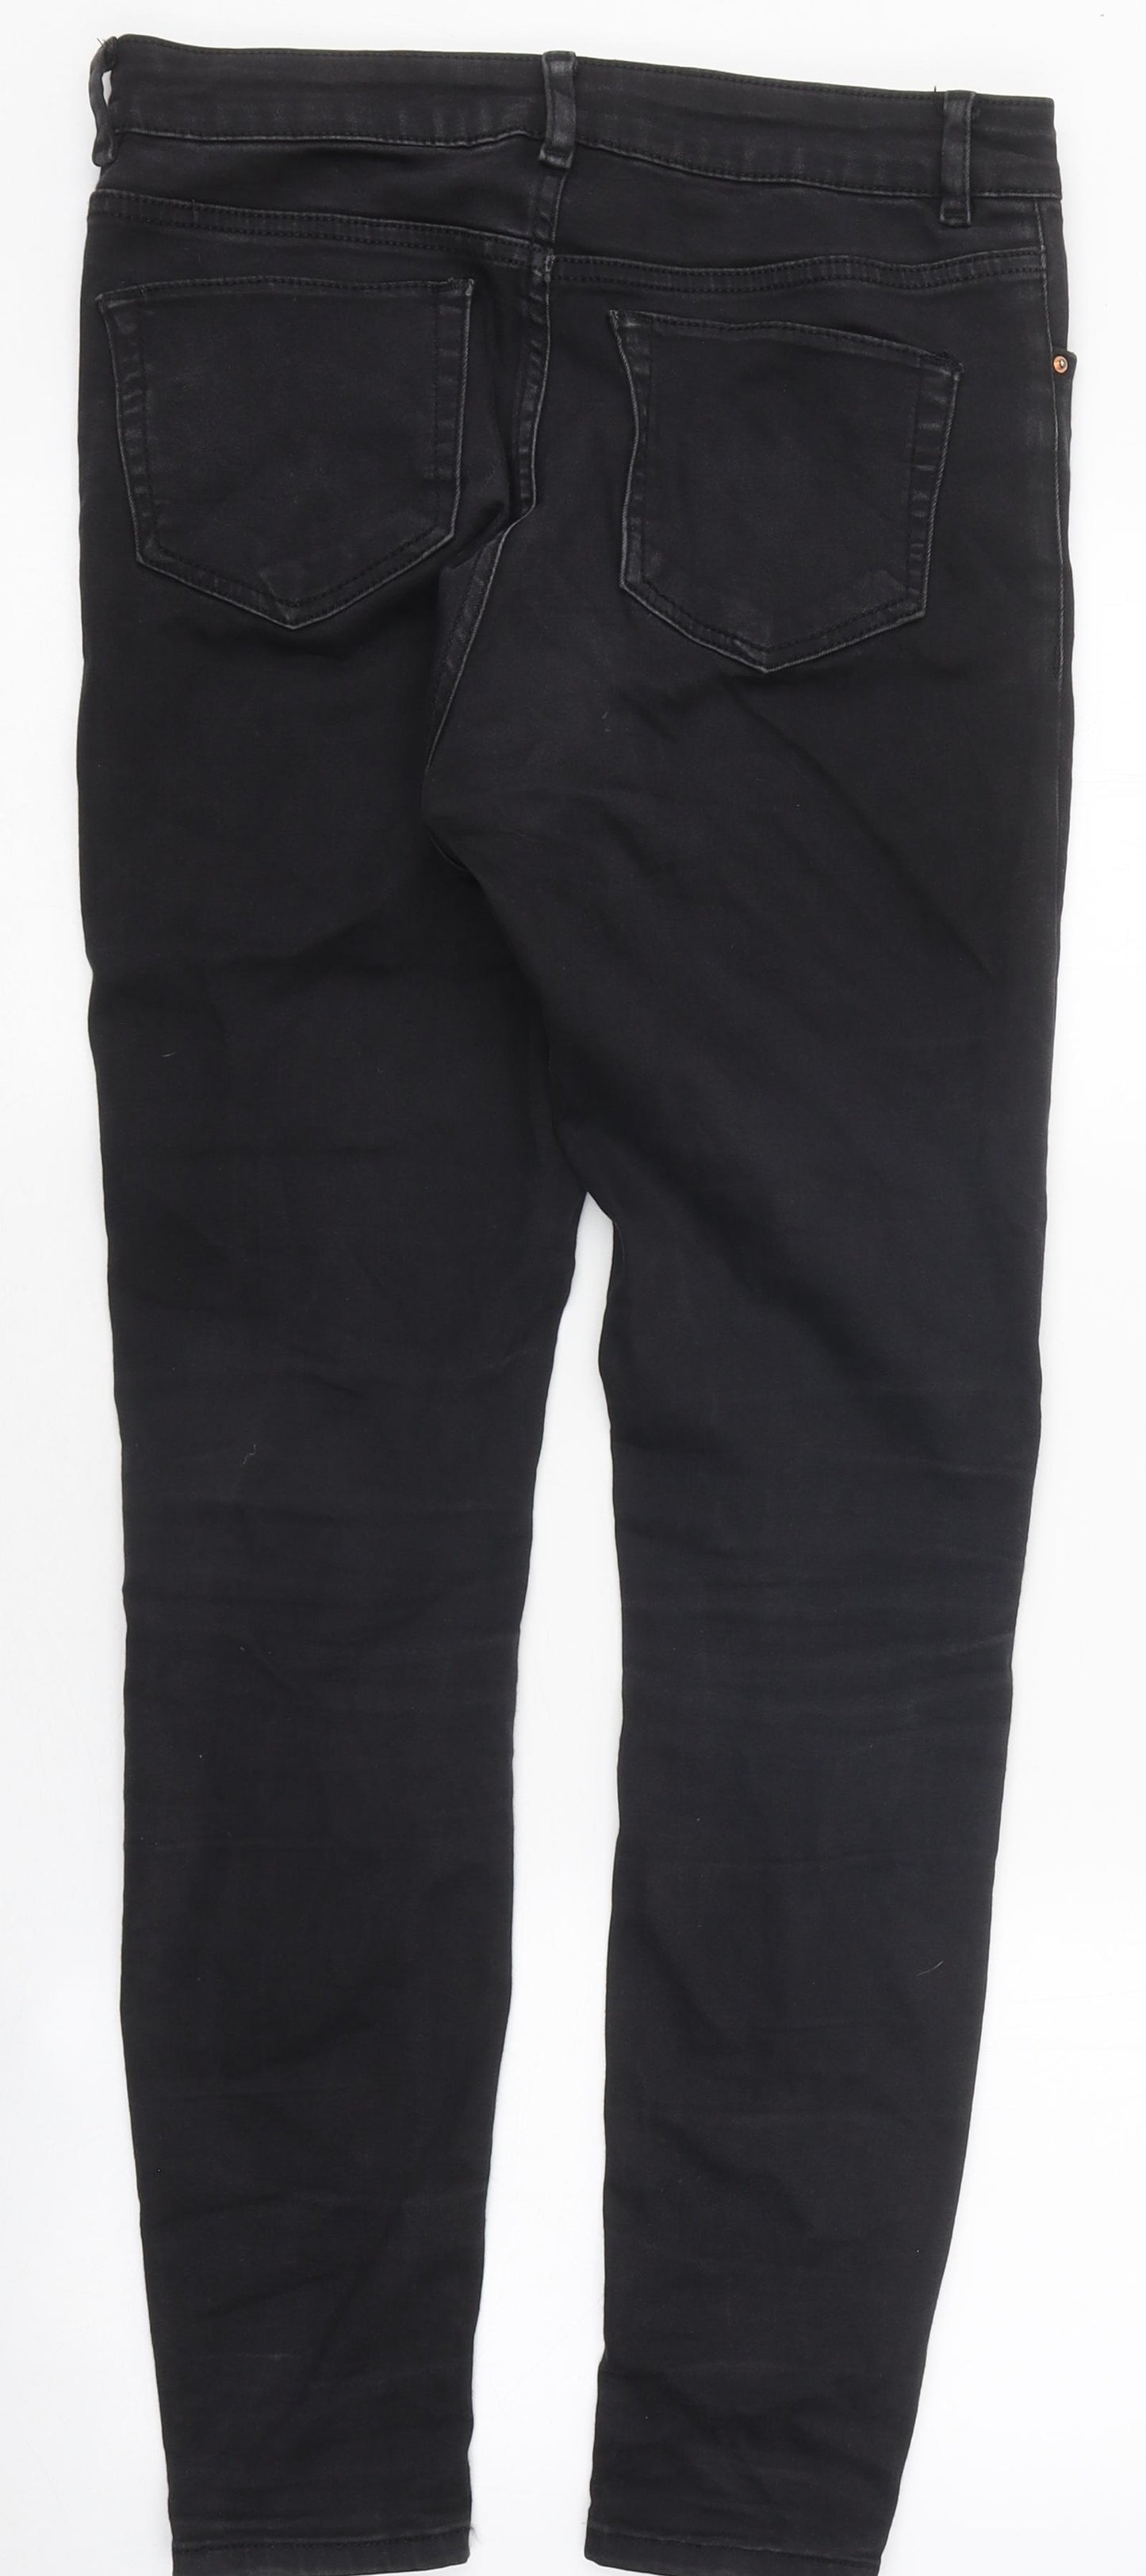 ASOS Mens Black Cotton Skinny Jeans Size 29 in L34 in Regular Zip